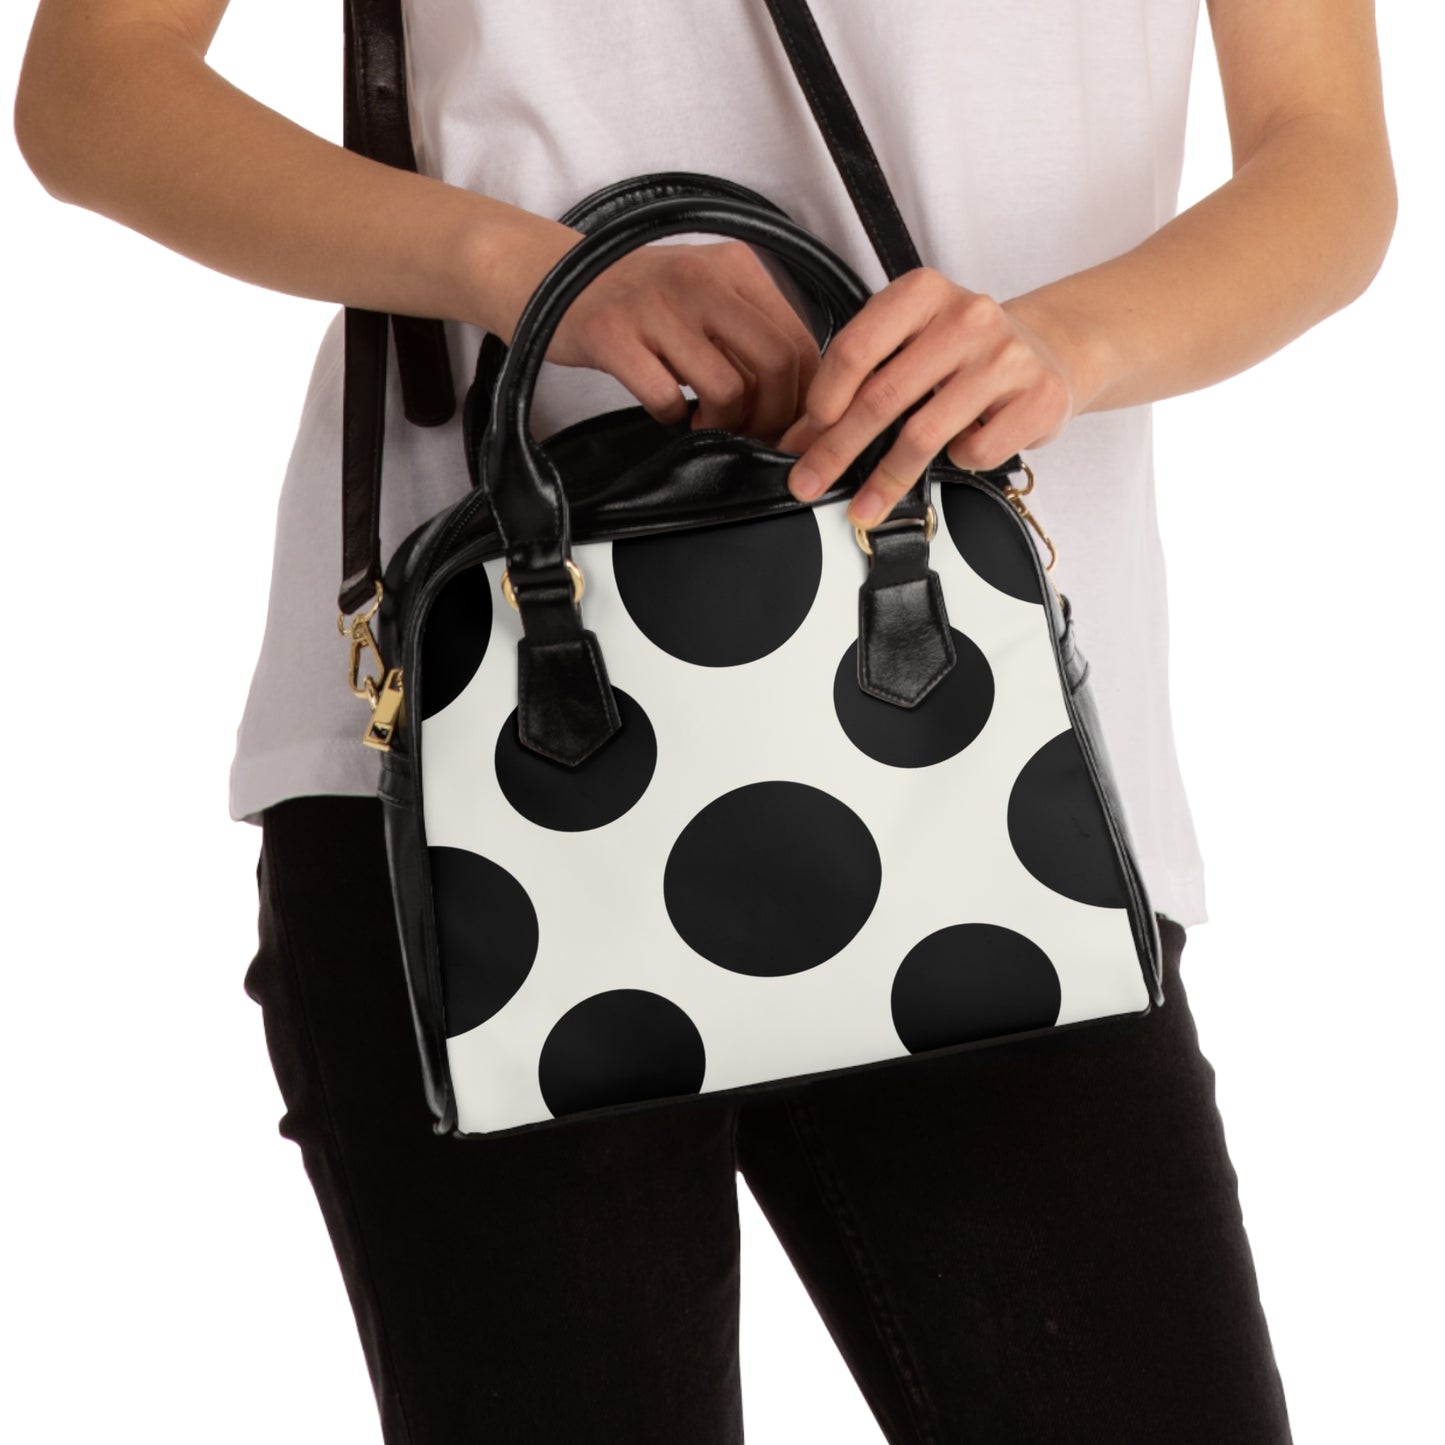 Cream and Black Dot Handbag